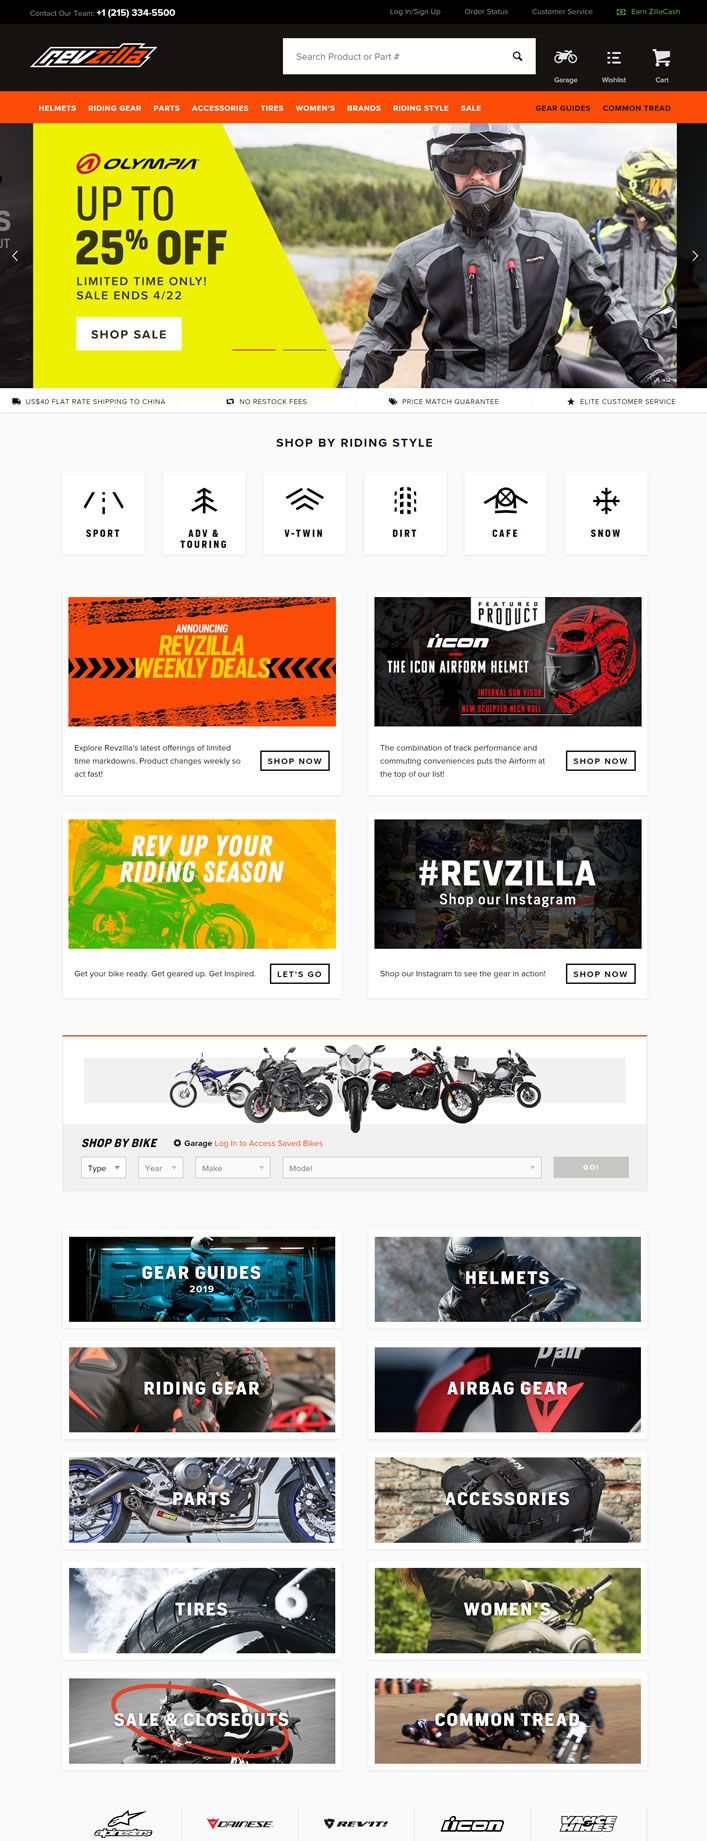 Global Motorcycle Gear Leader: RevZilla